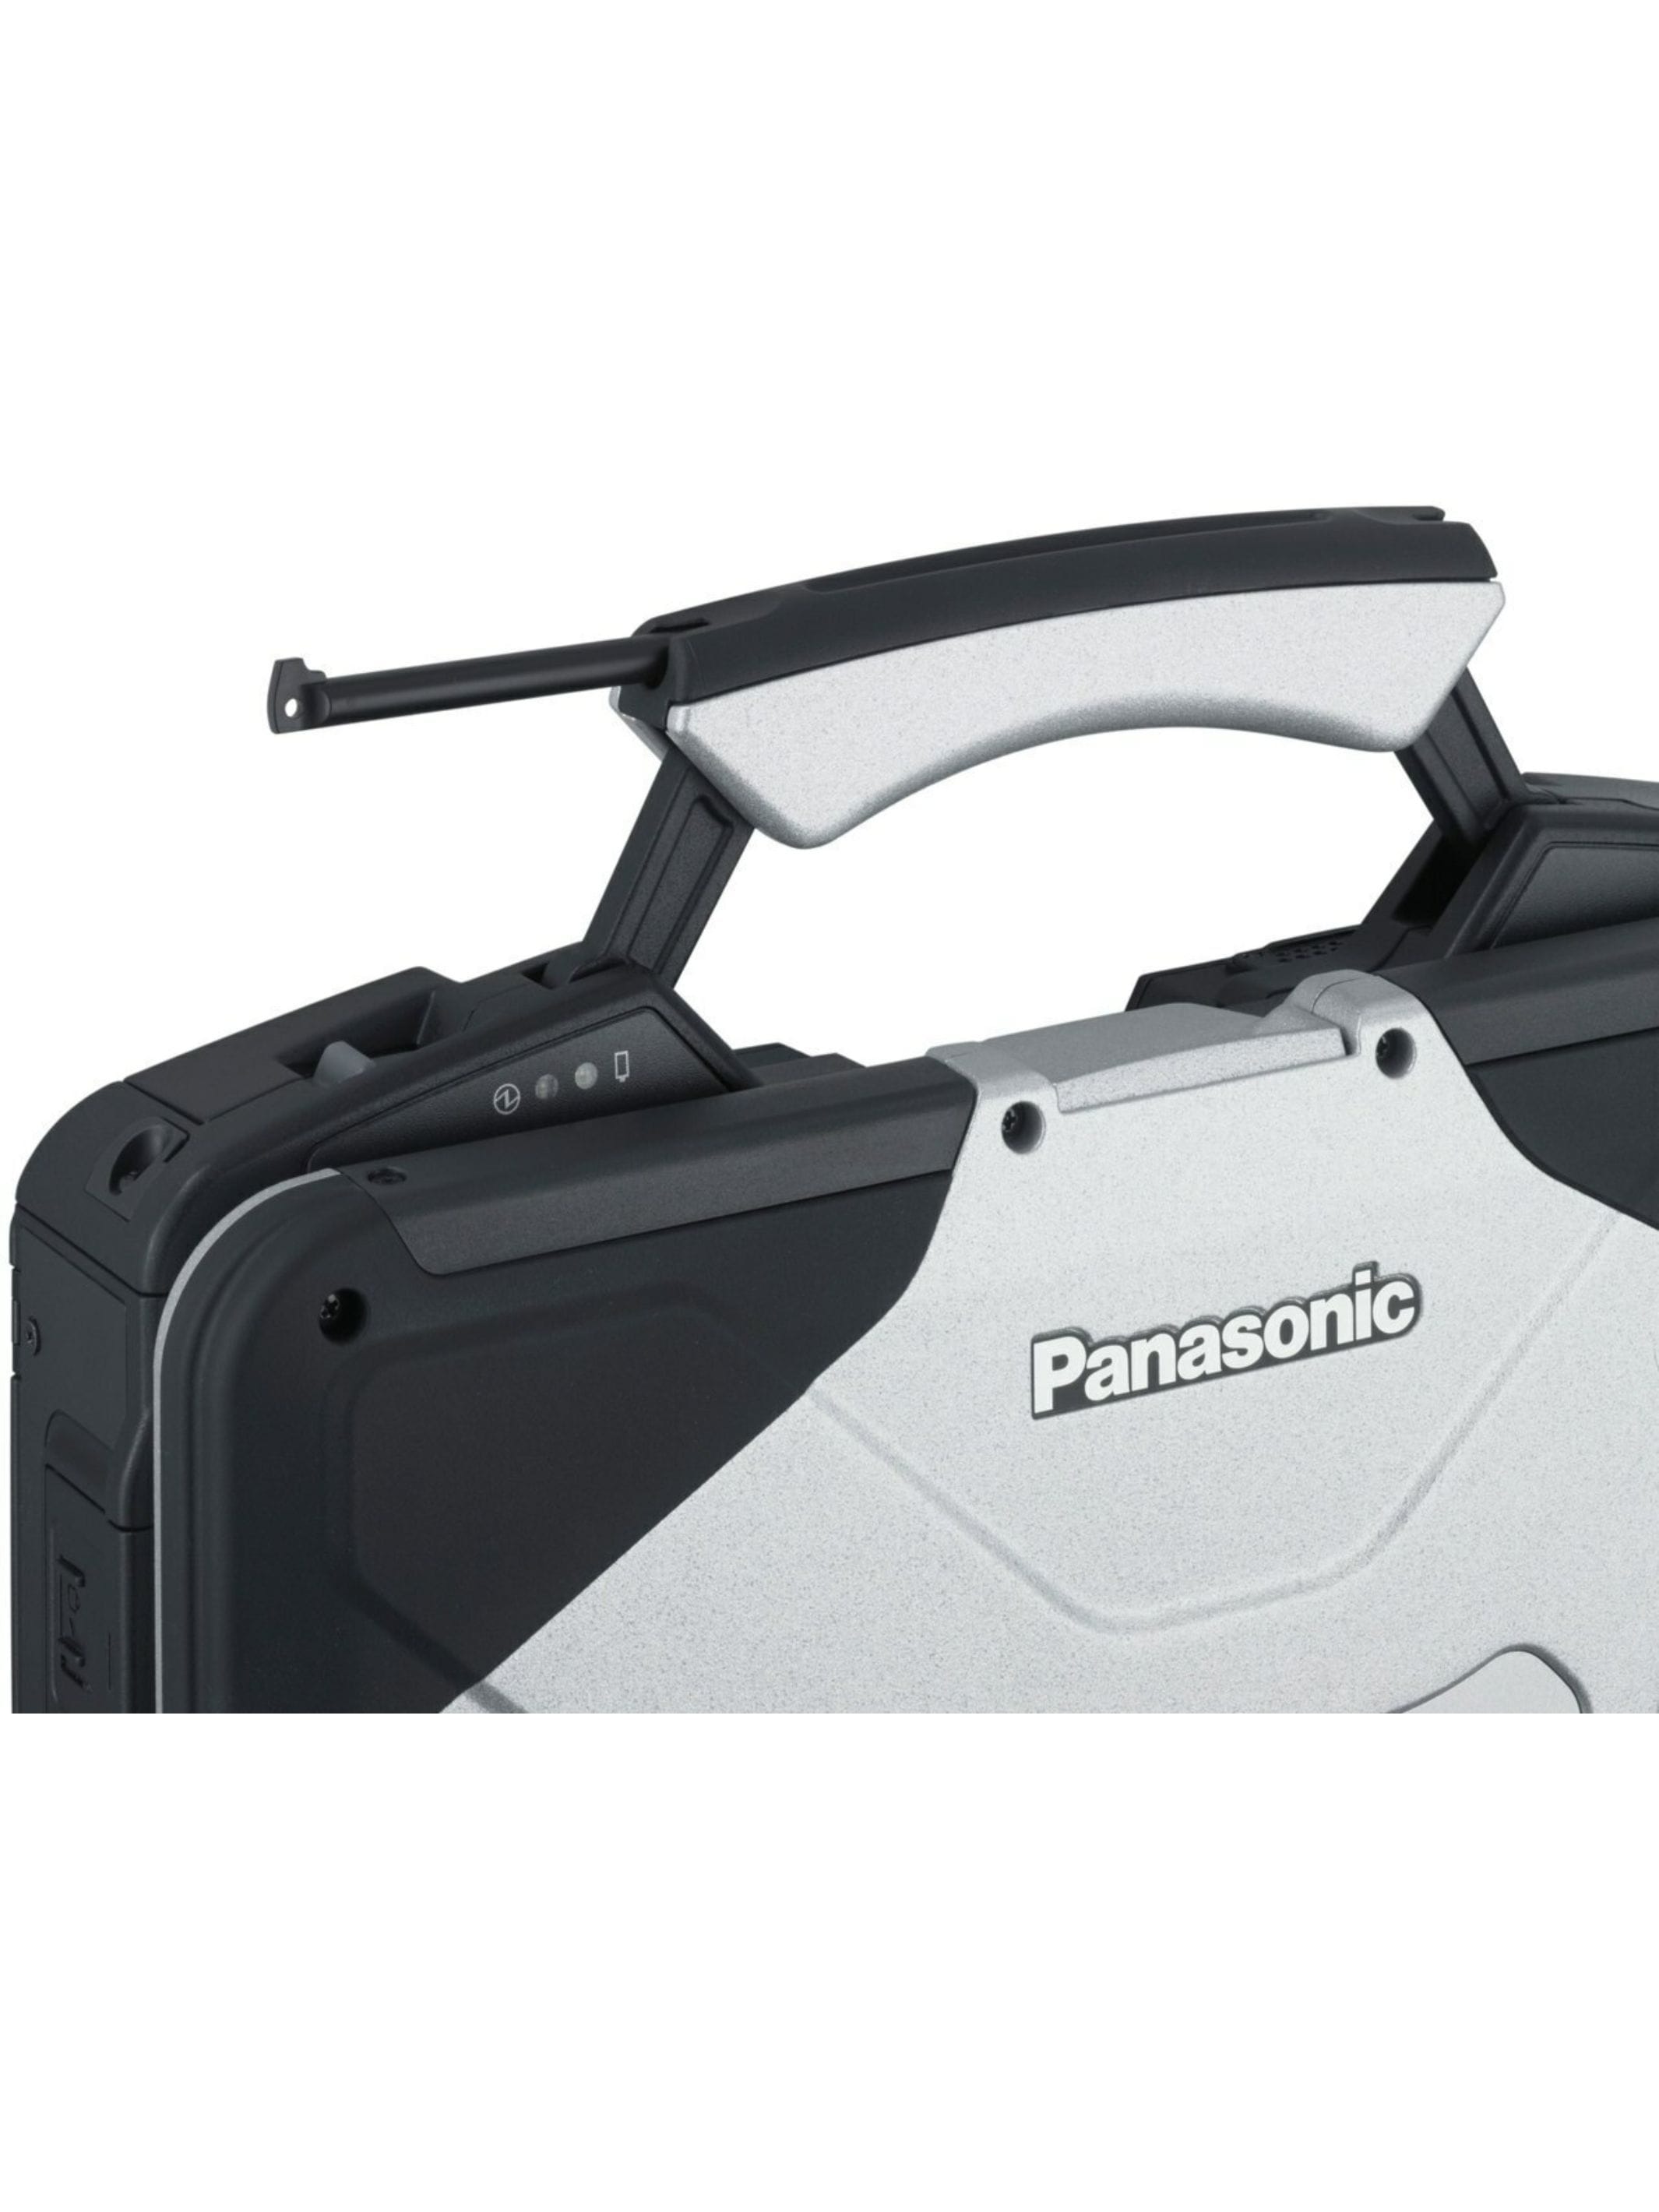 Refurbished Panasonic Toughbook cf 31